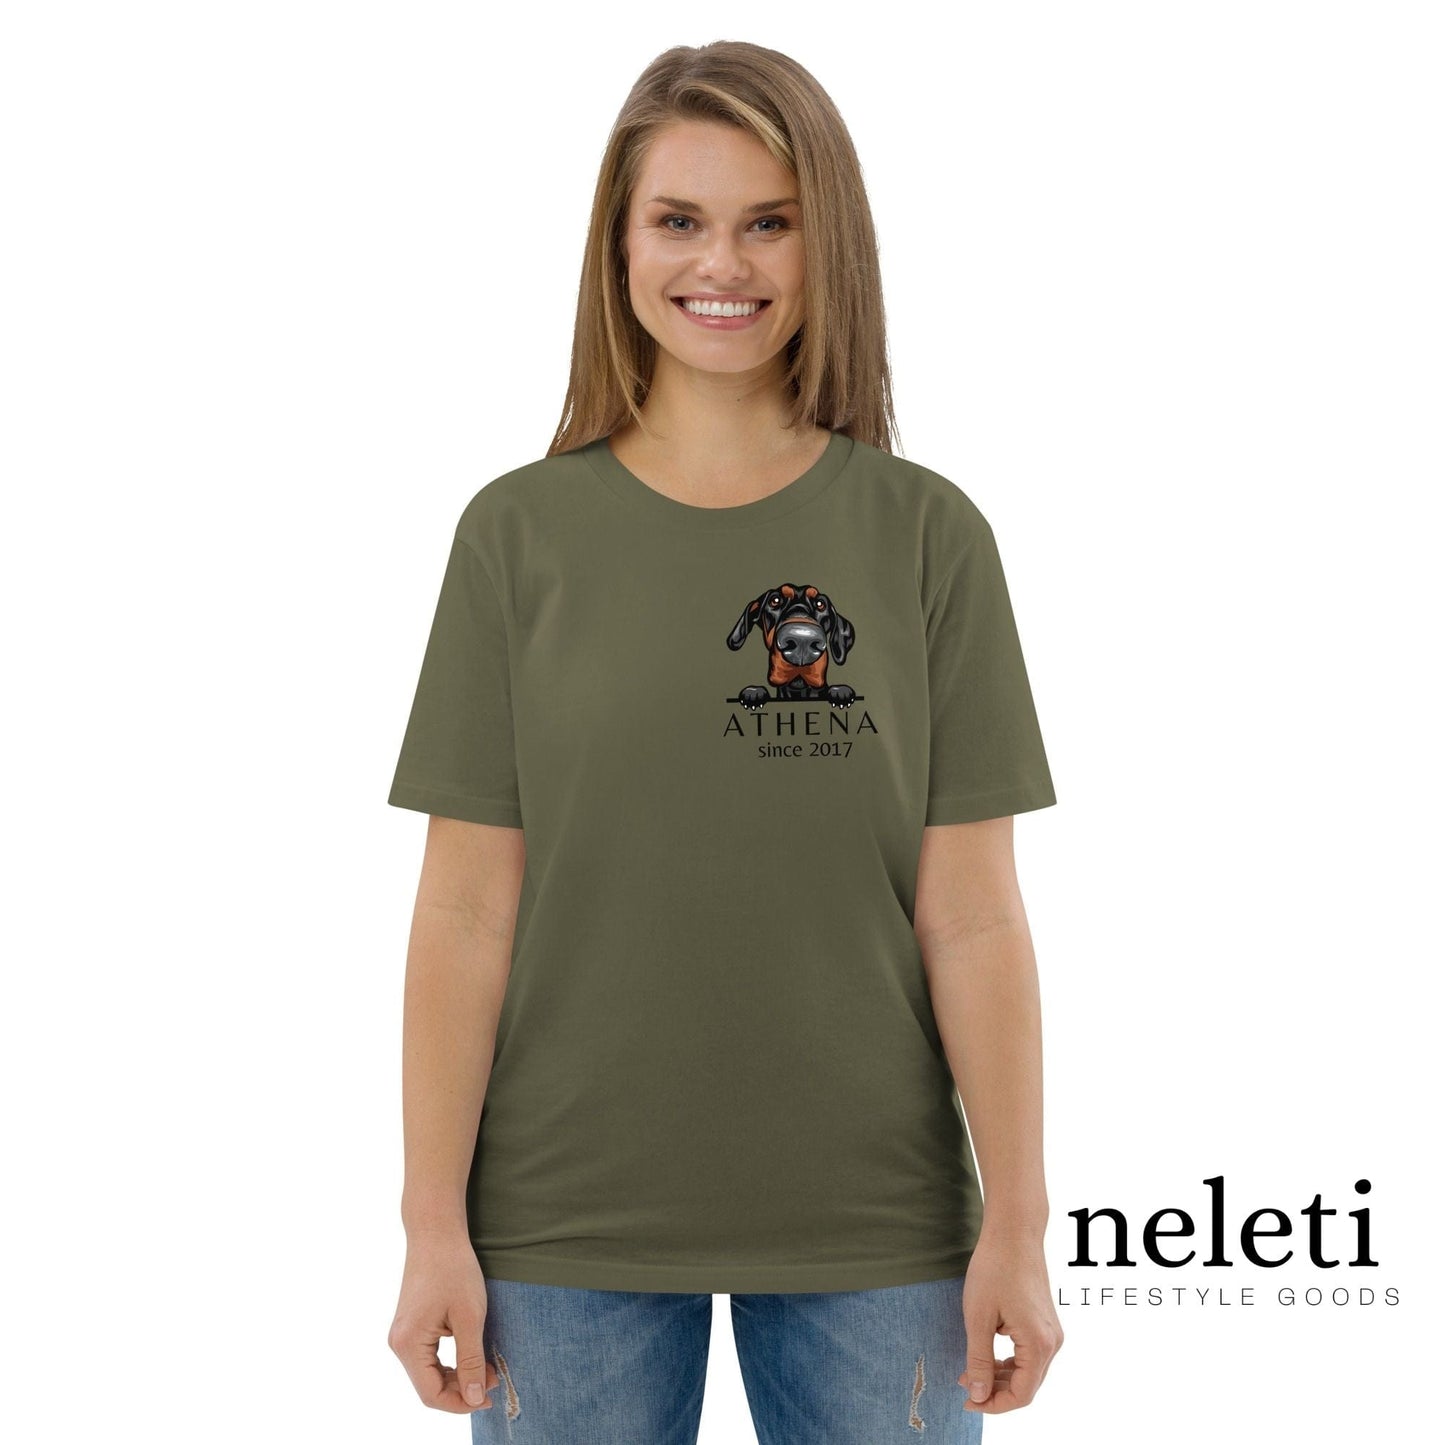 neleti.com-custom-khaki-shirt-for-dog-mom